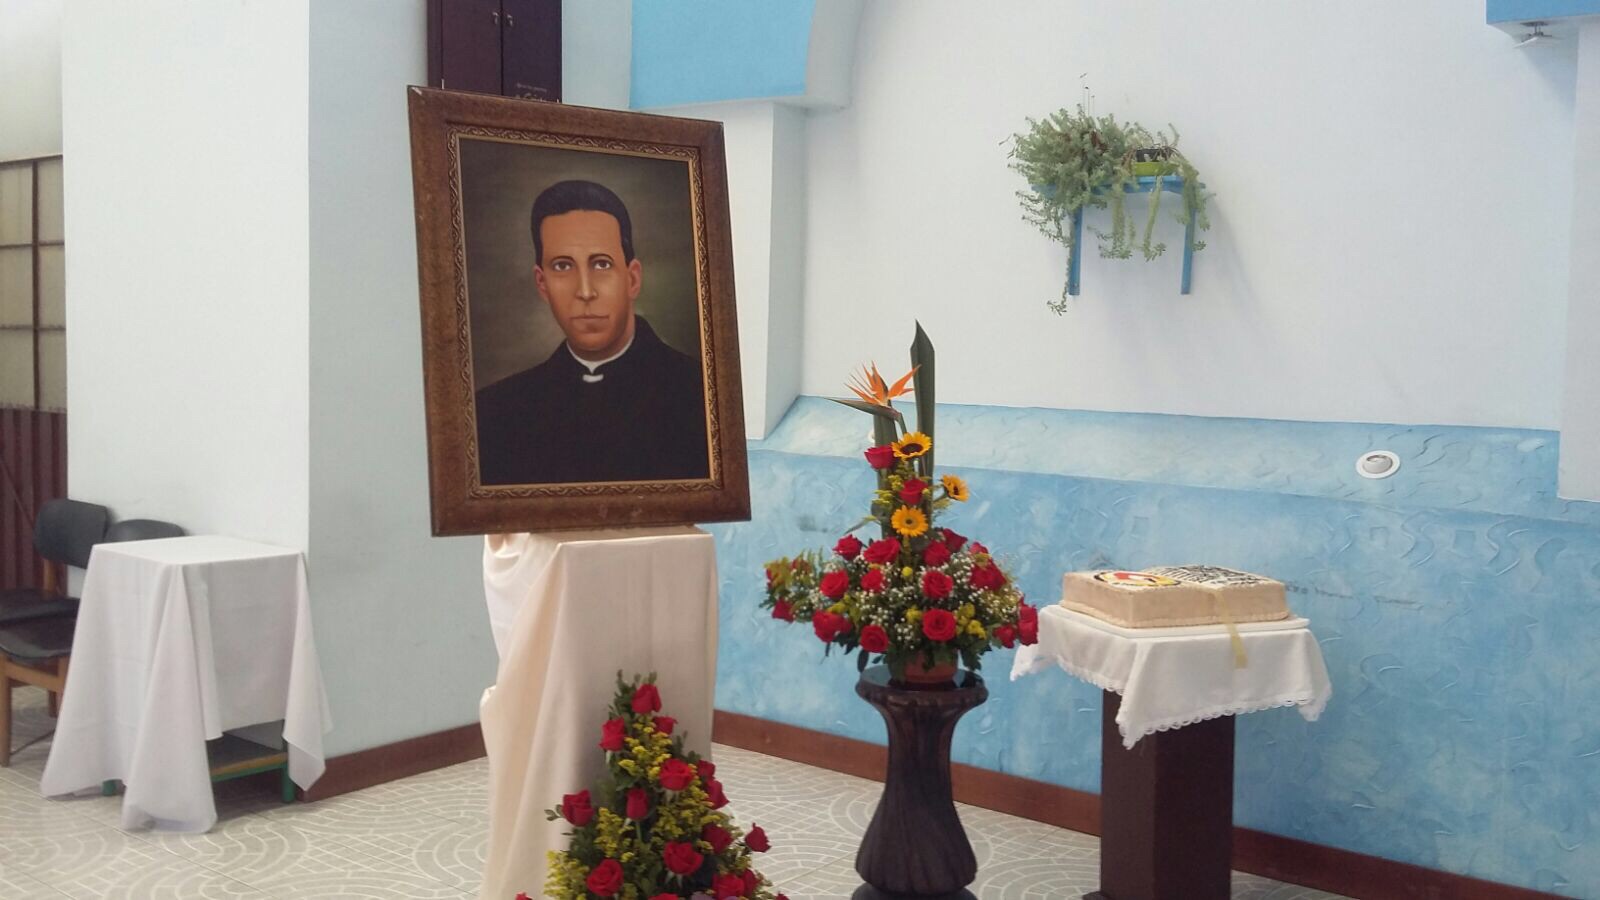 https://arquimedia.s3.amazonaws.com/161/imagenes/celebracion-liturgica-san-alberto-hurtado-4jpg.jpg